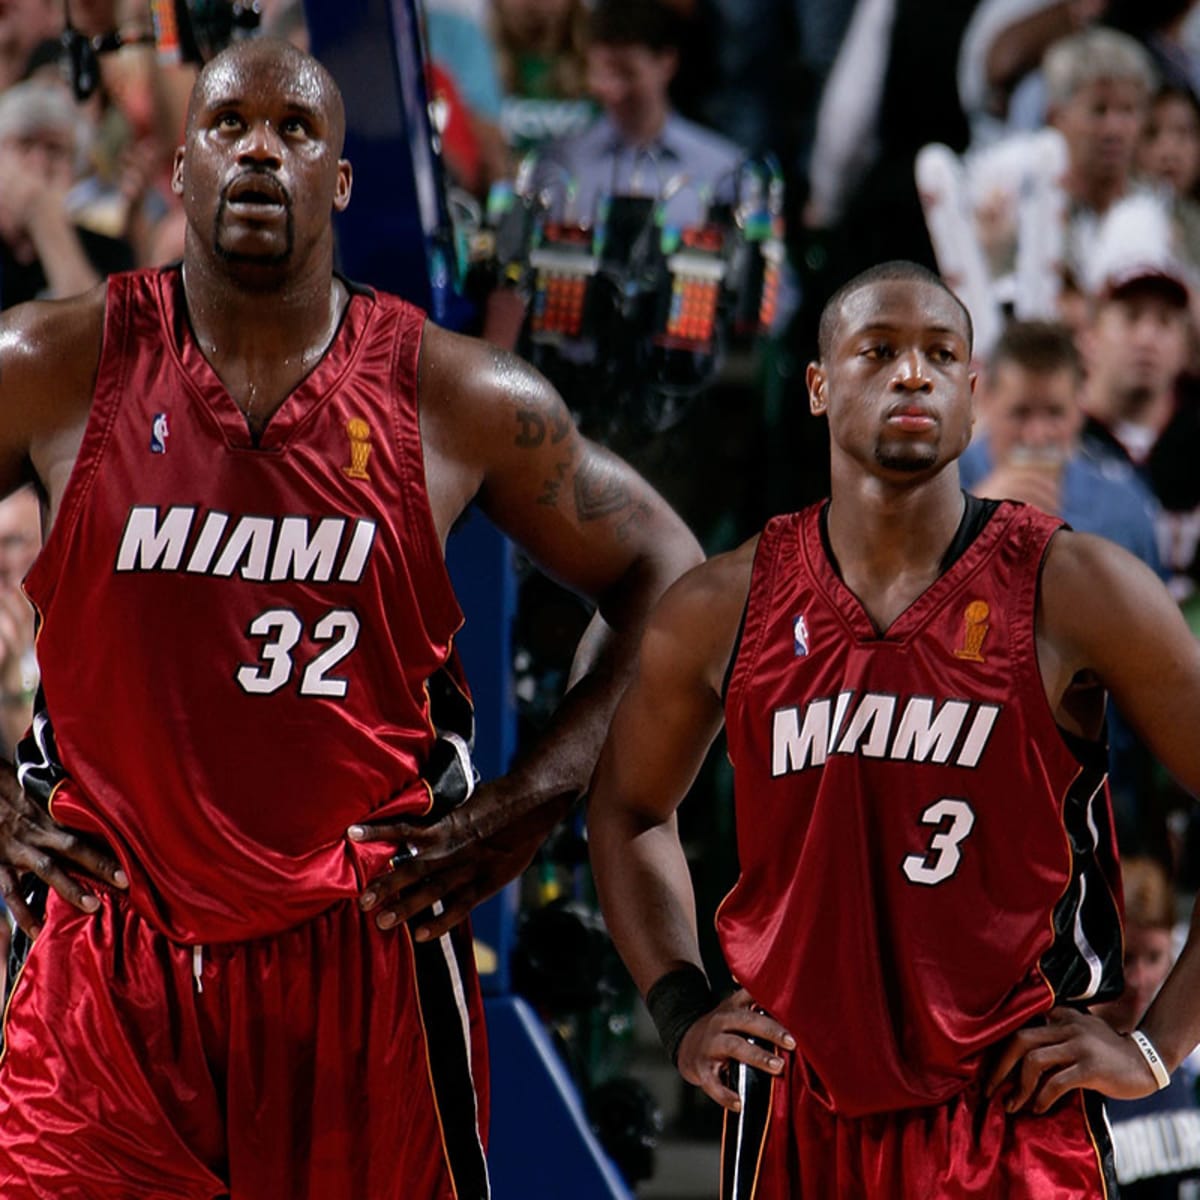 2006 NBA Finals Champions Miami Heat Shaquille O'Neal Alternative